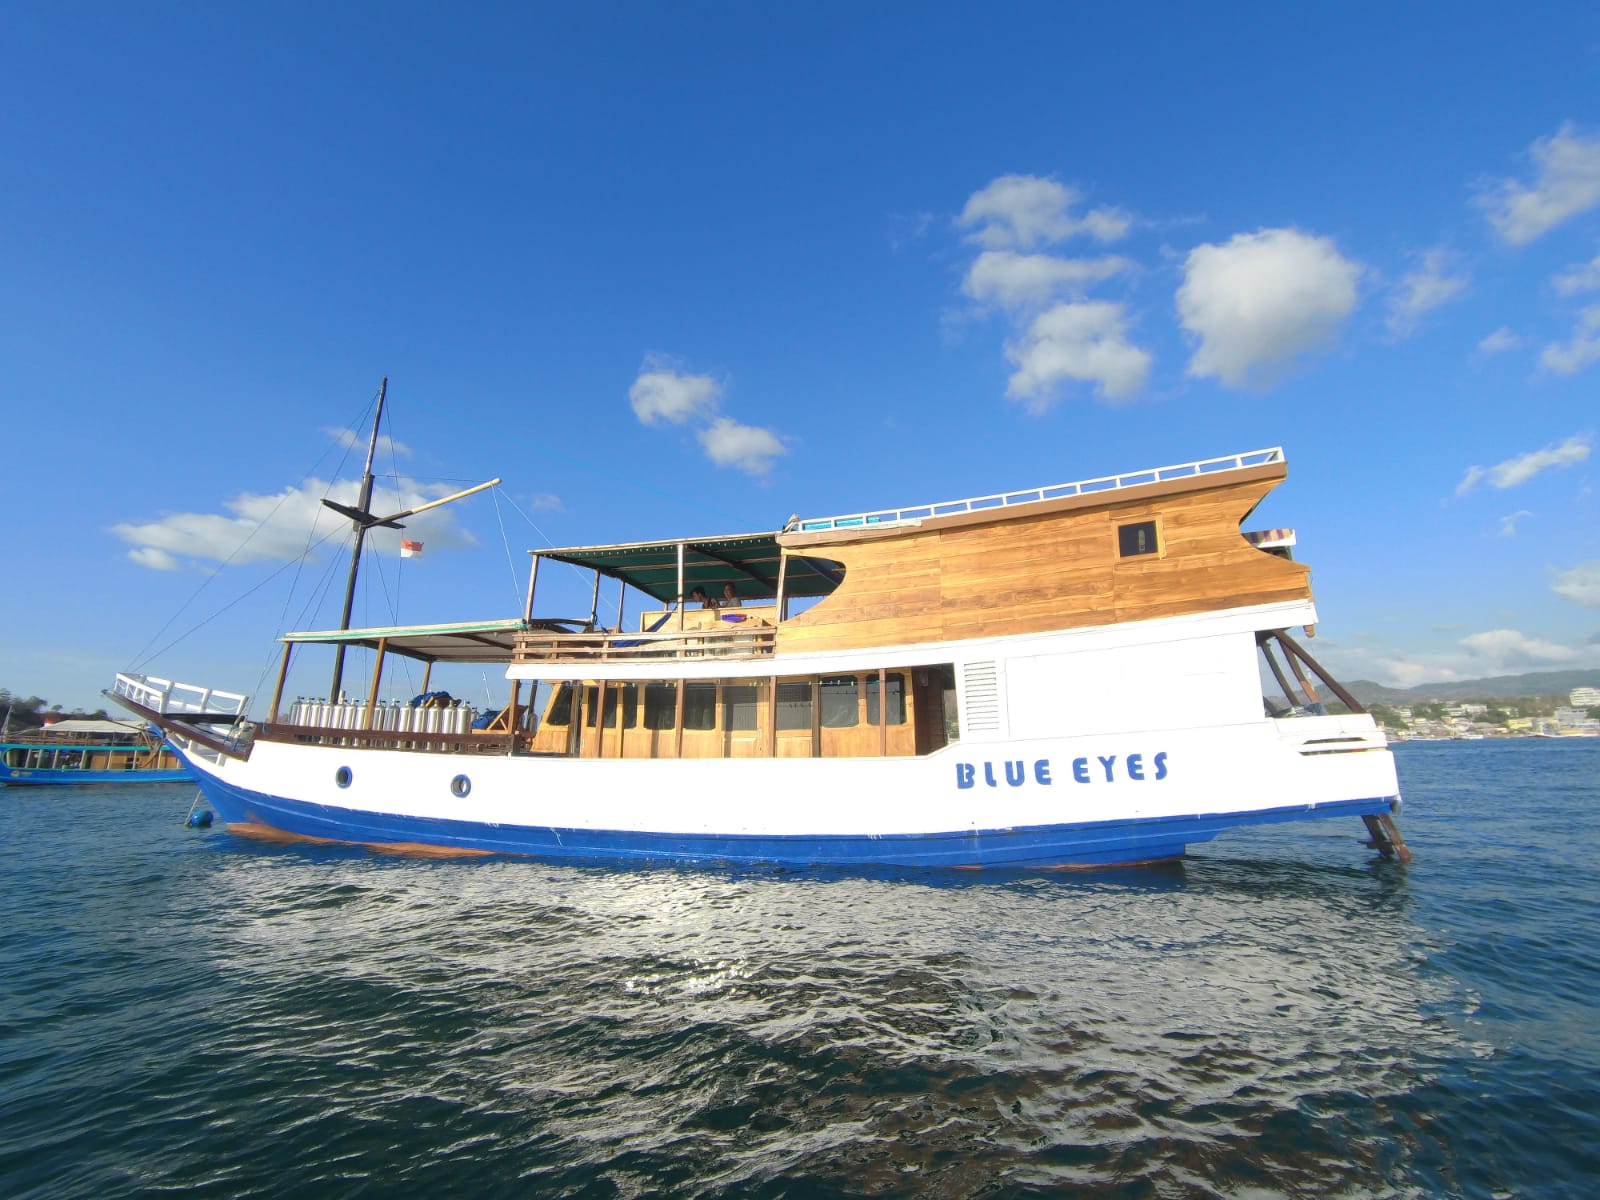 Blue Eyes Boat, explore labuan bajo